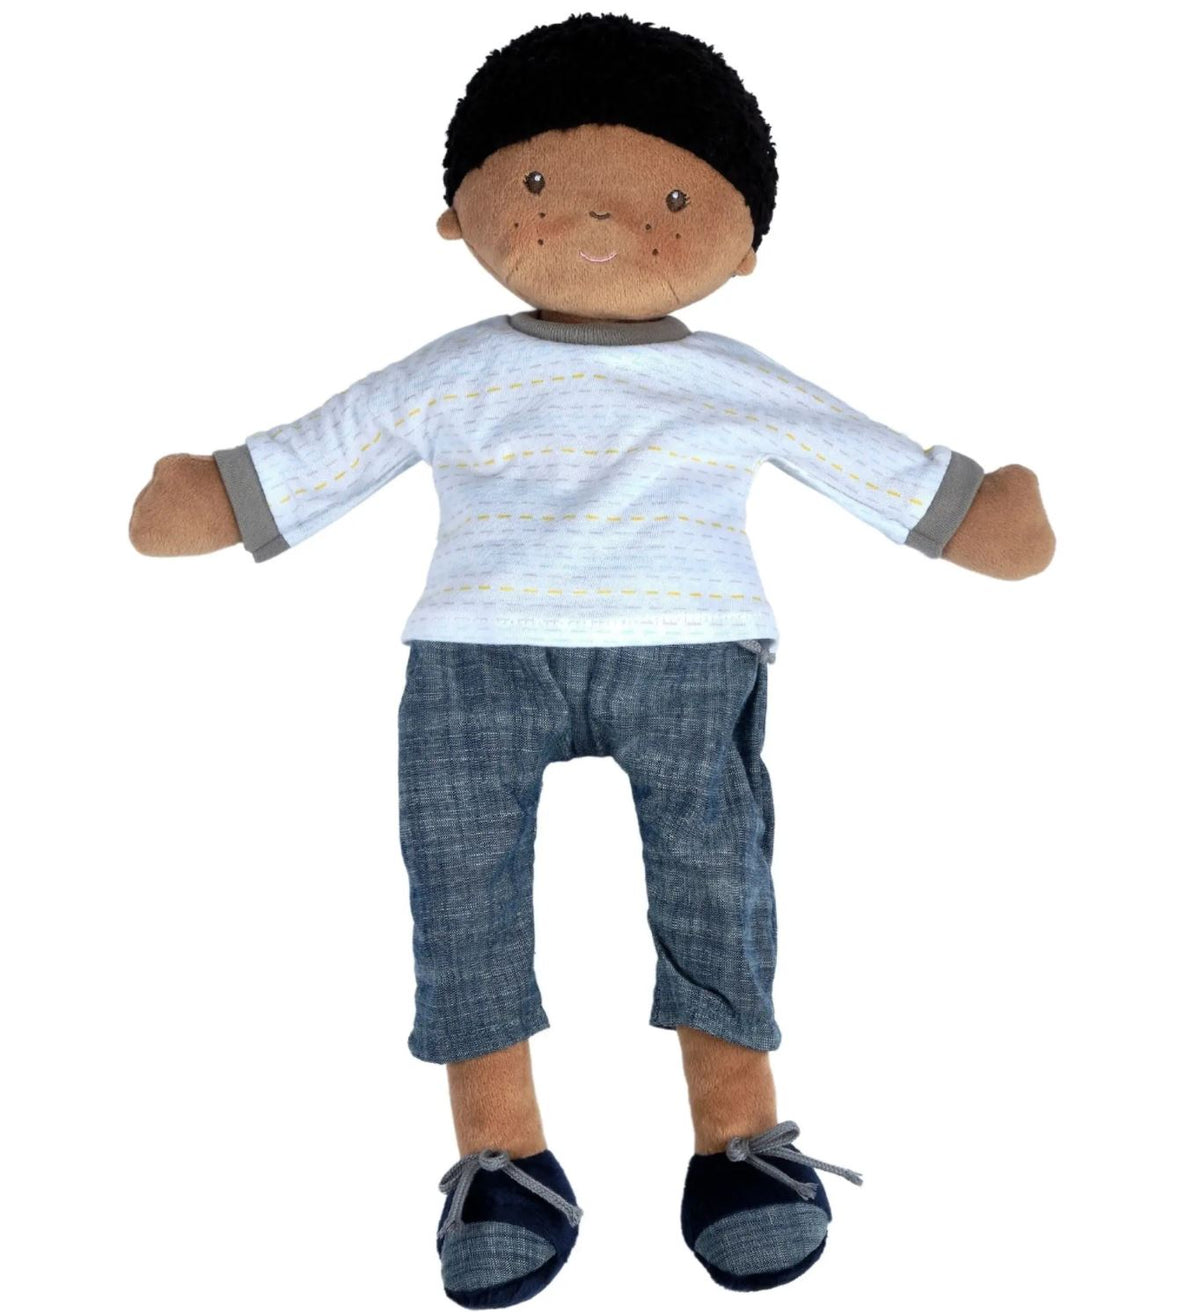 Jayden - Boy Doll